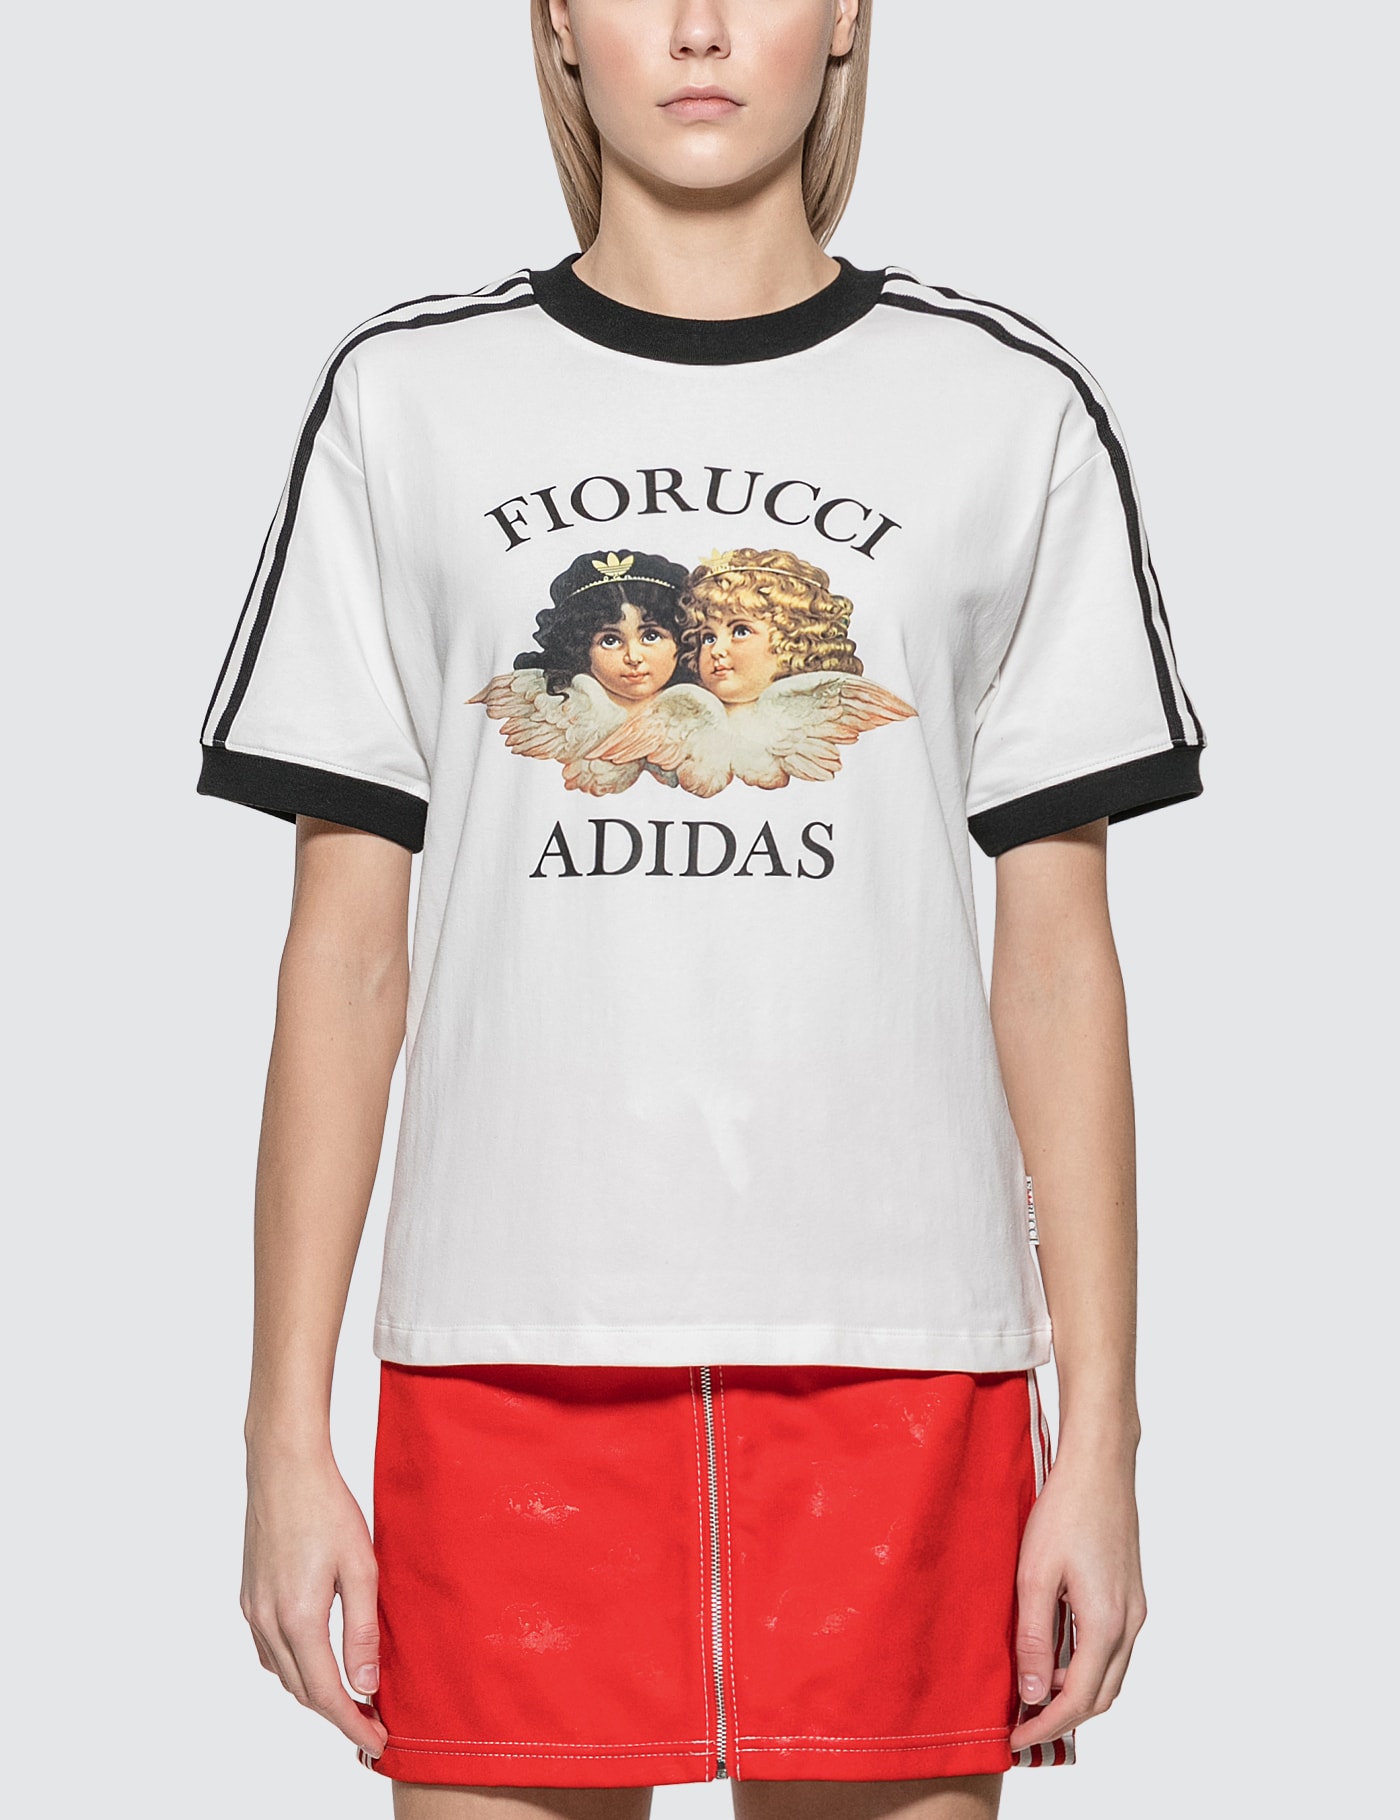 Adidas Originals - Adidas Originals x Fiorucci T-shirt | HBX